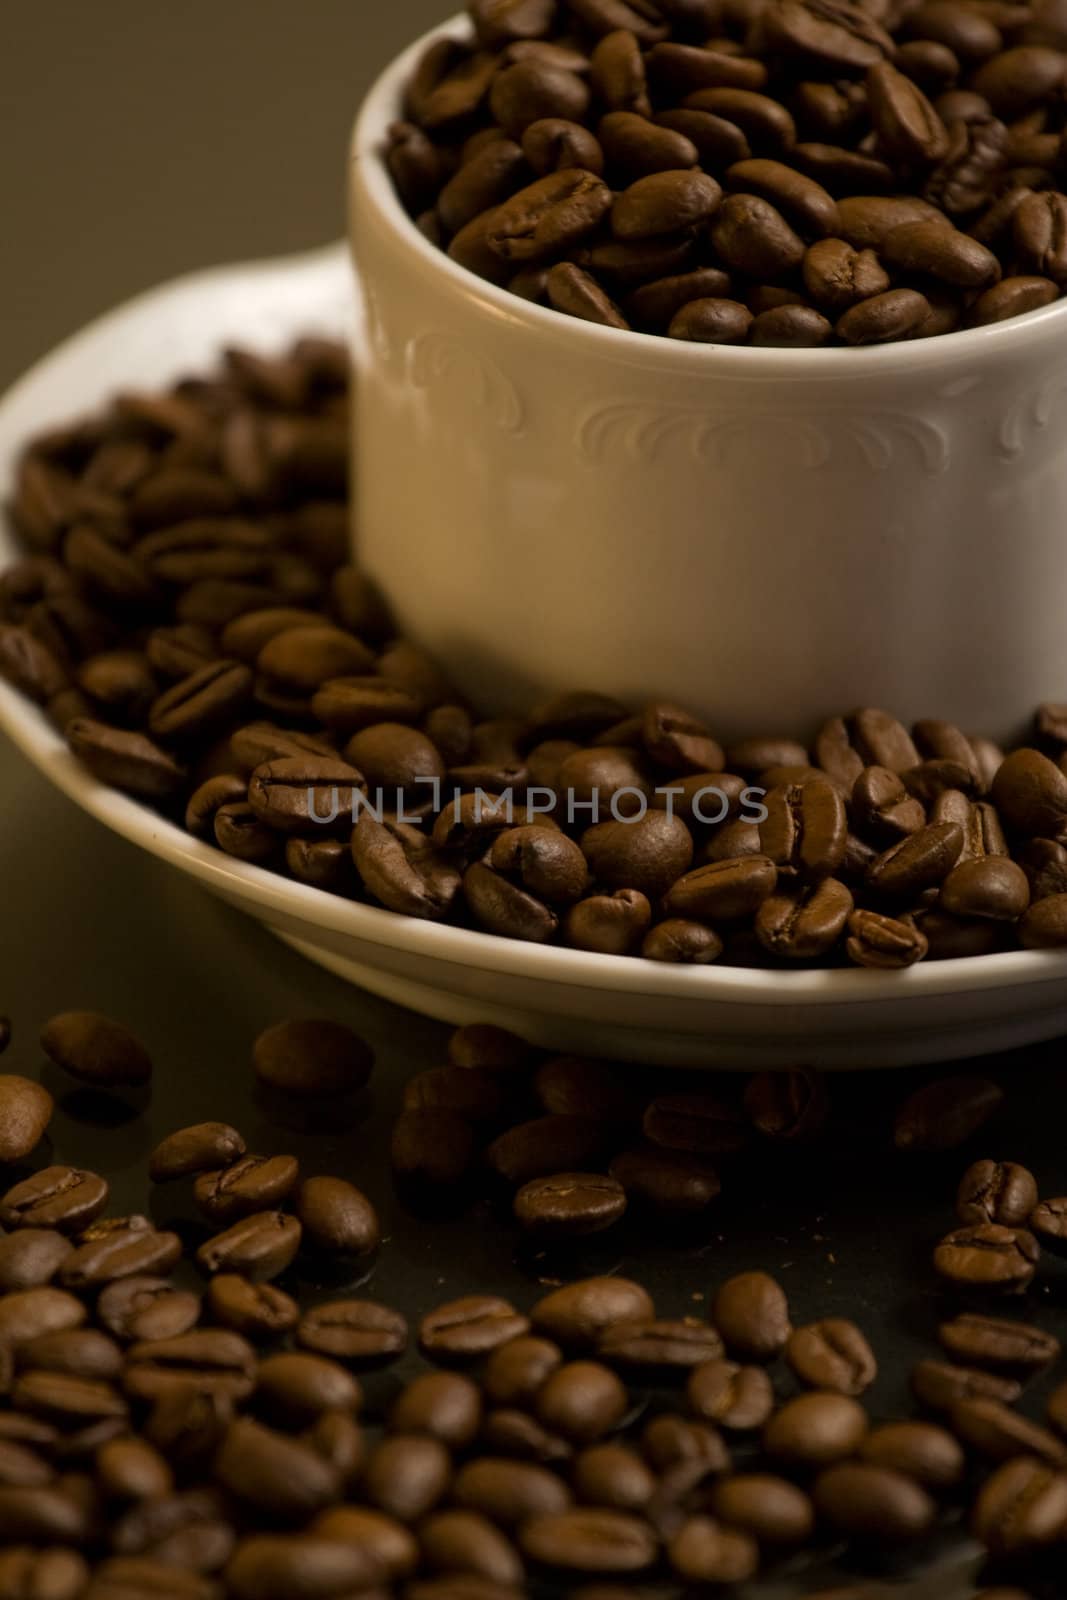 Tasty coffee with plenty of roasted coffee beans around.